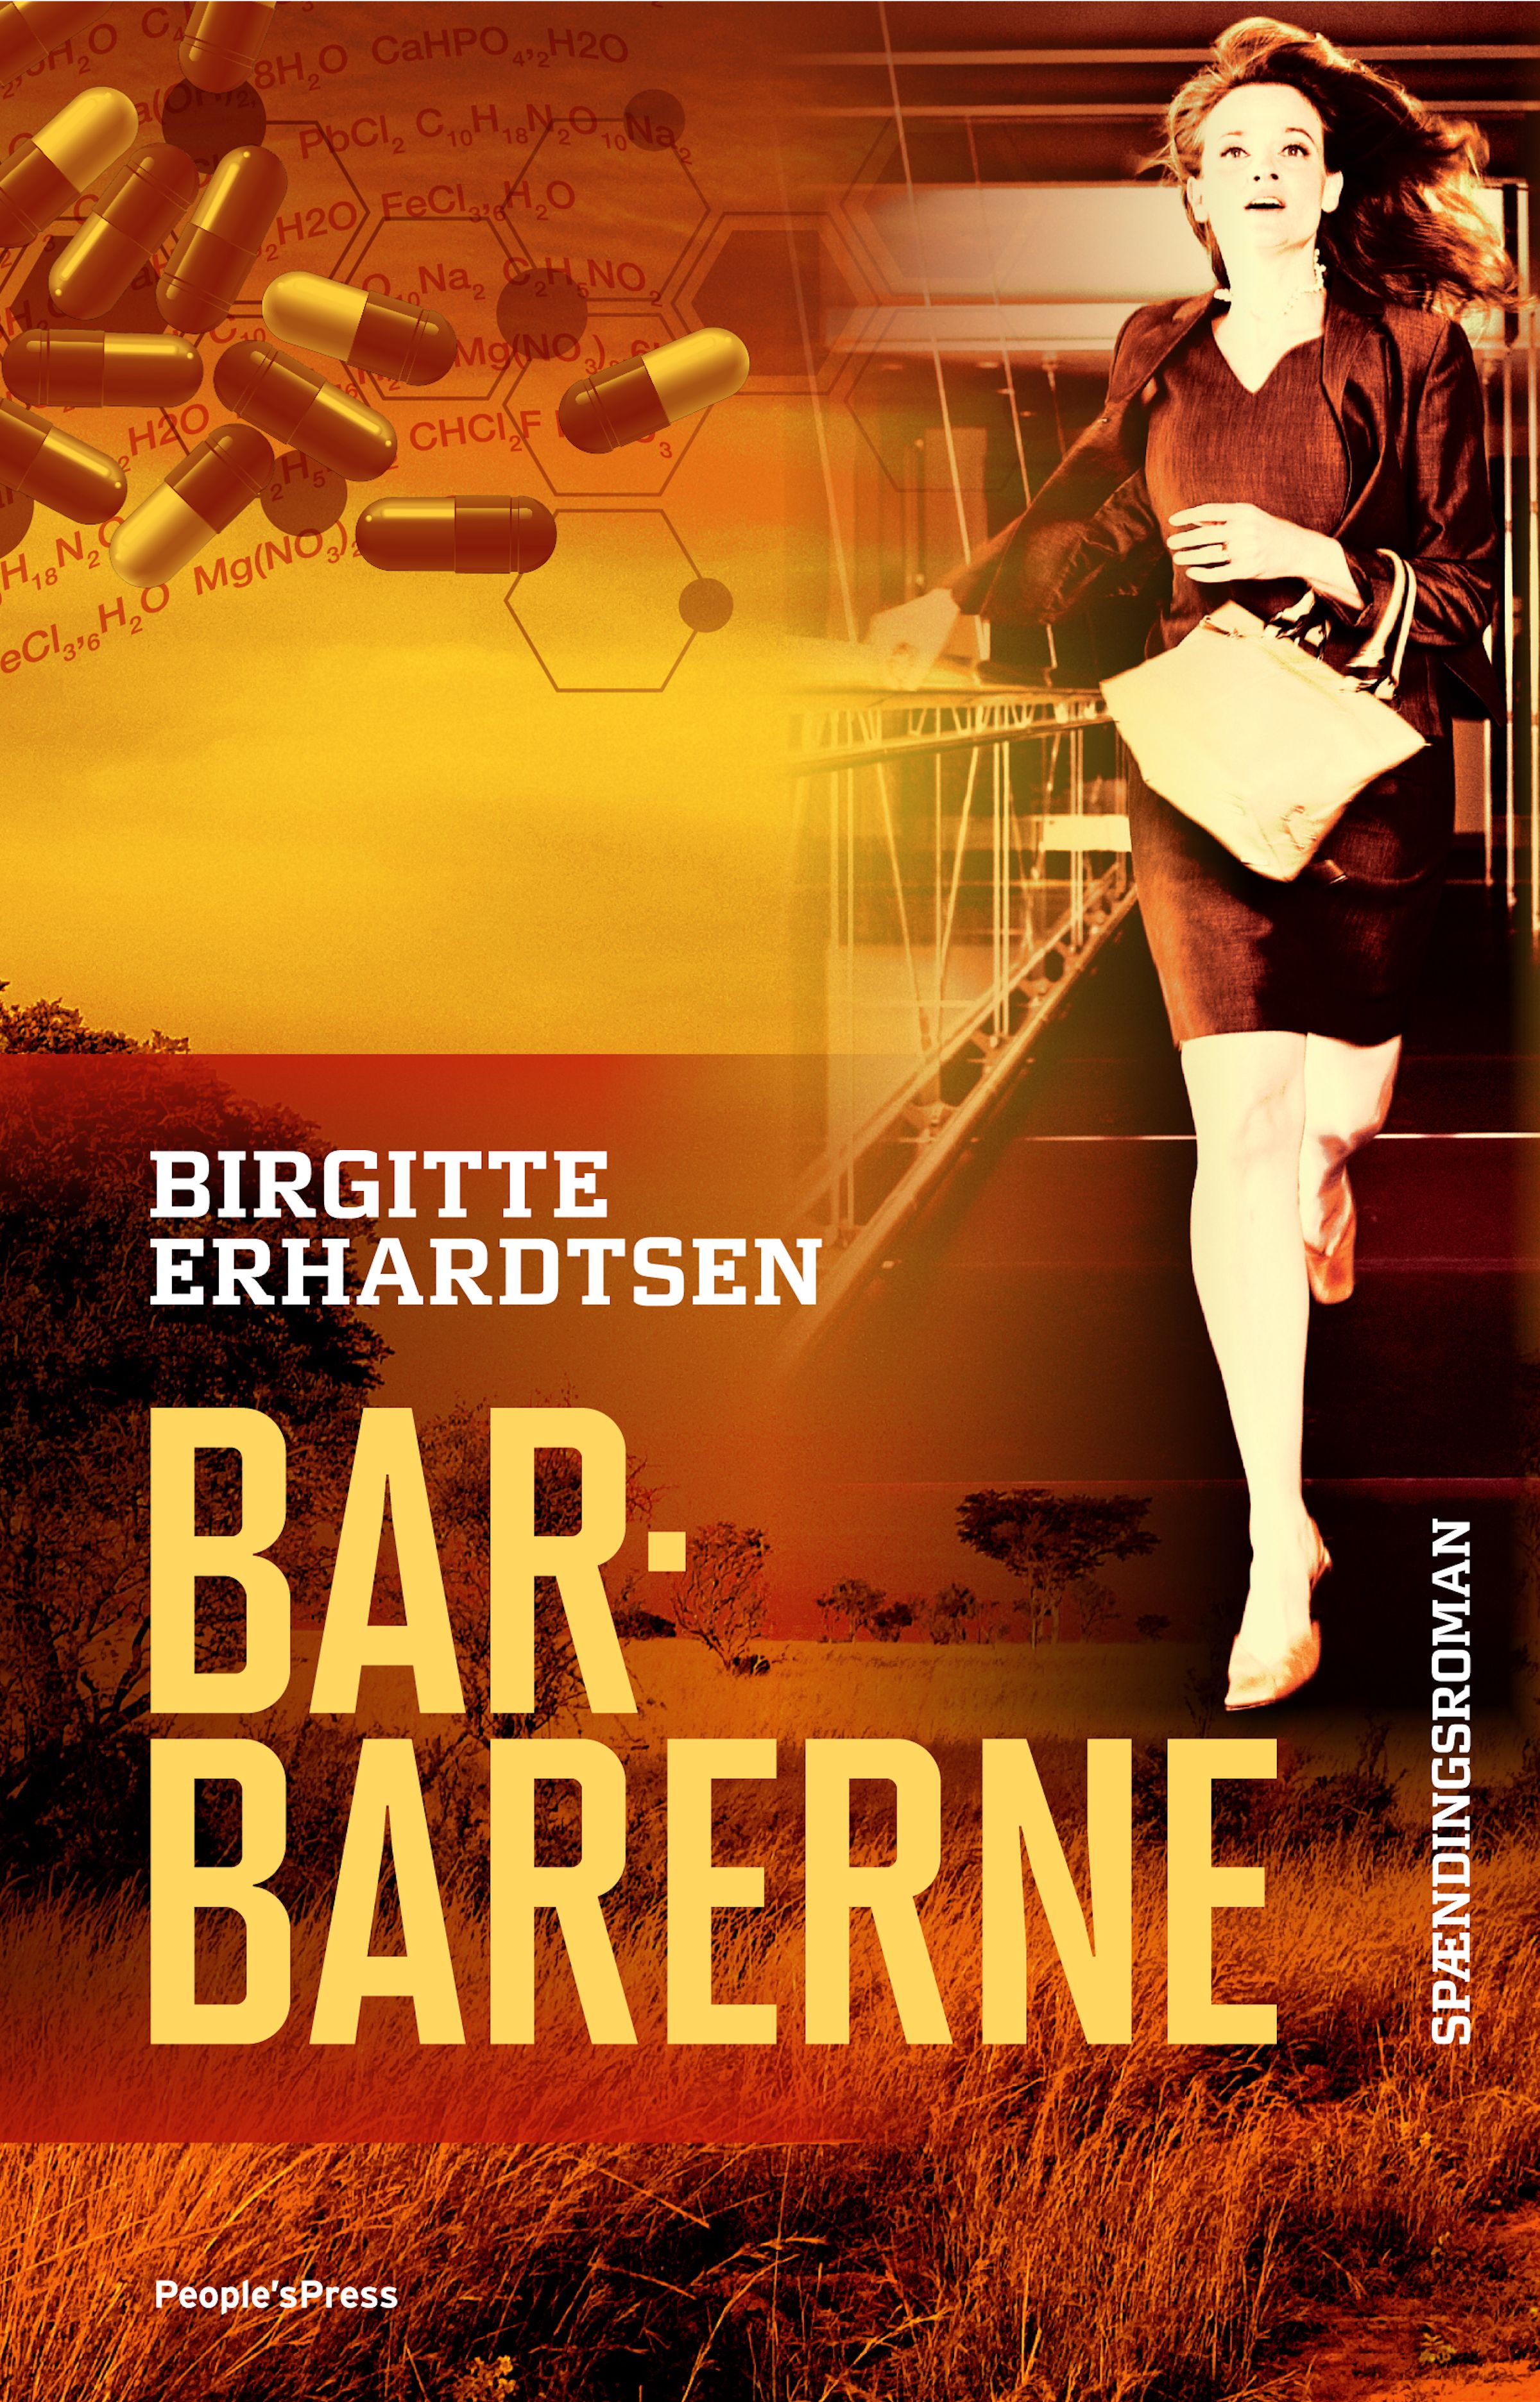 Barbarerne, eBook by Birgitte Erhardtsen